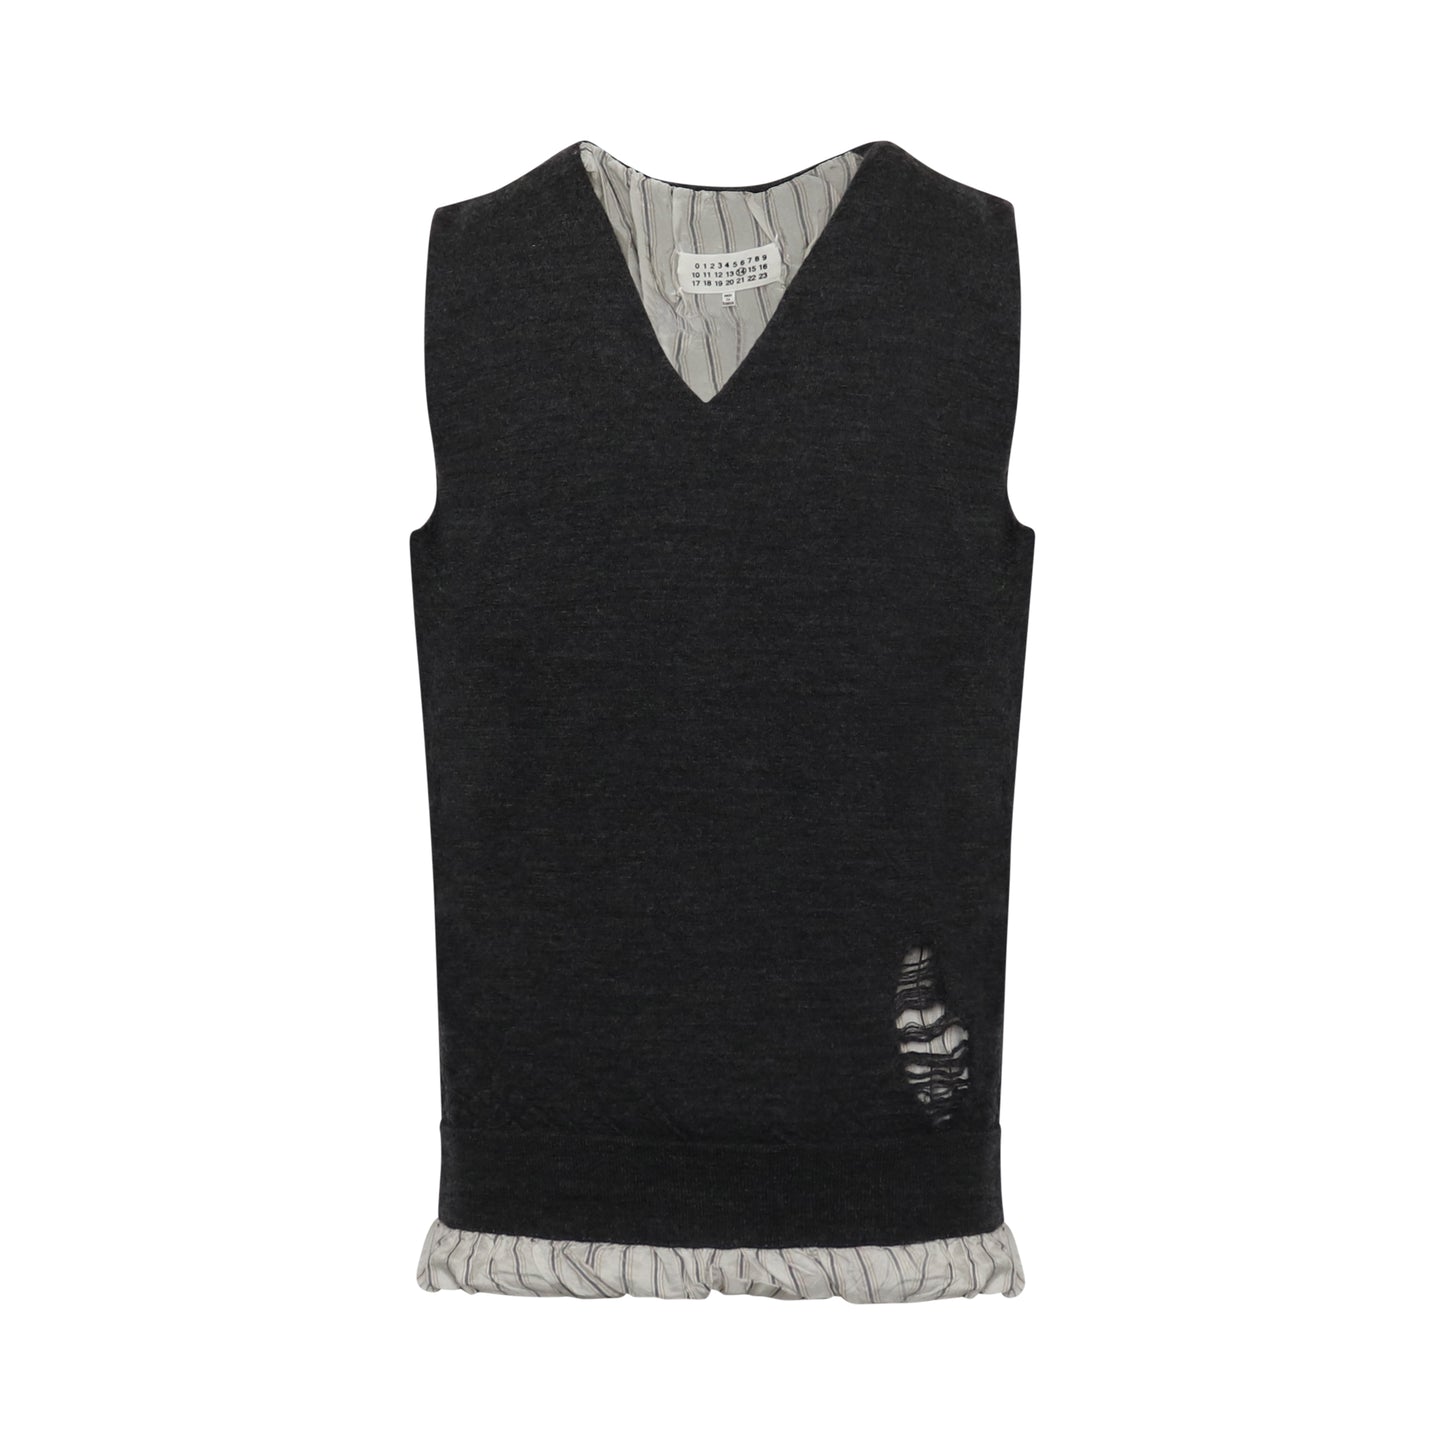 Distressed Knit Vest Sweater in Dark Grey